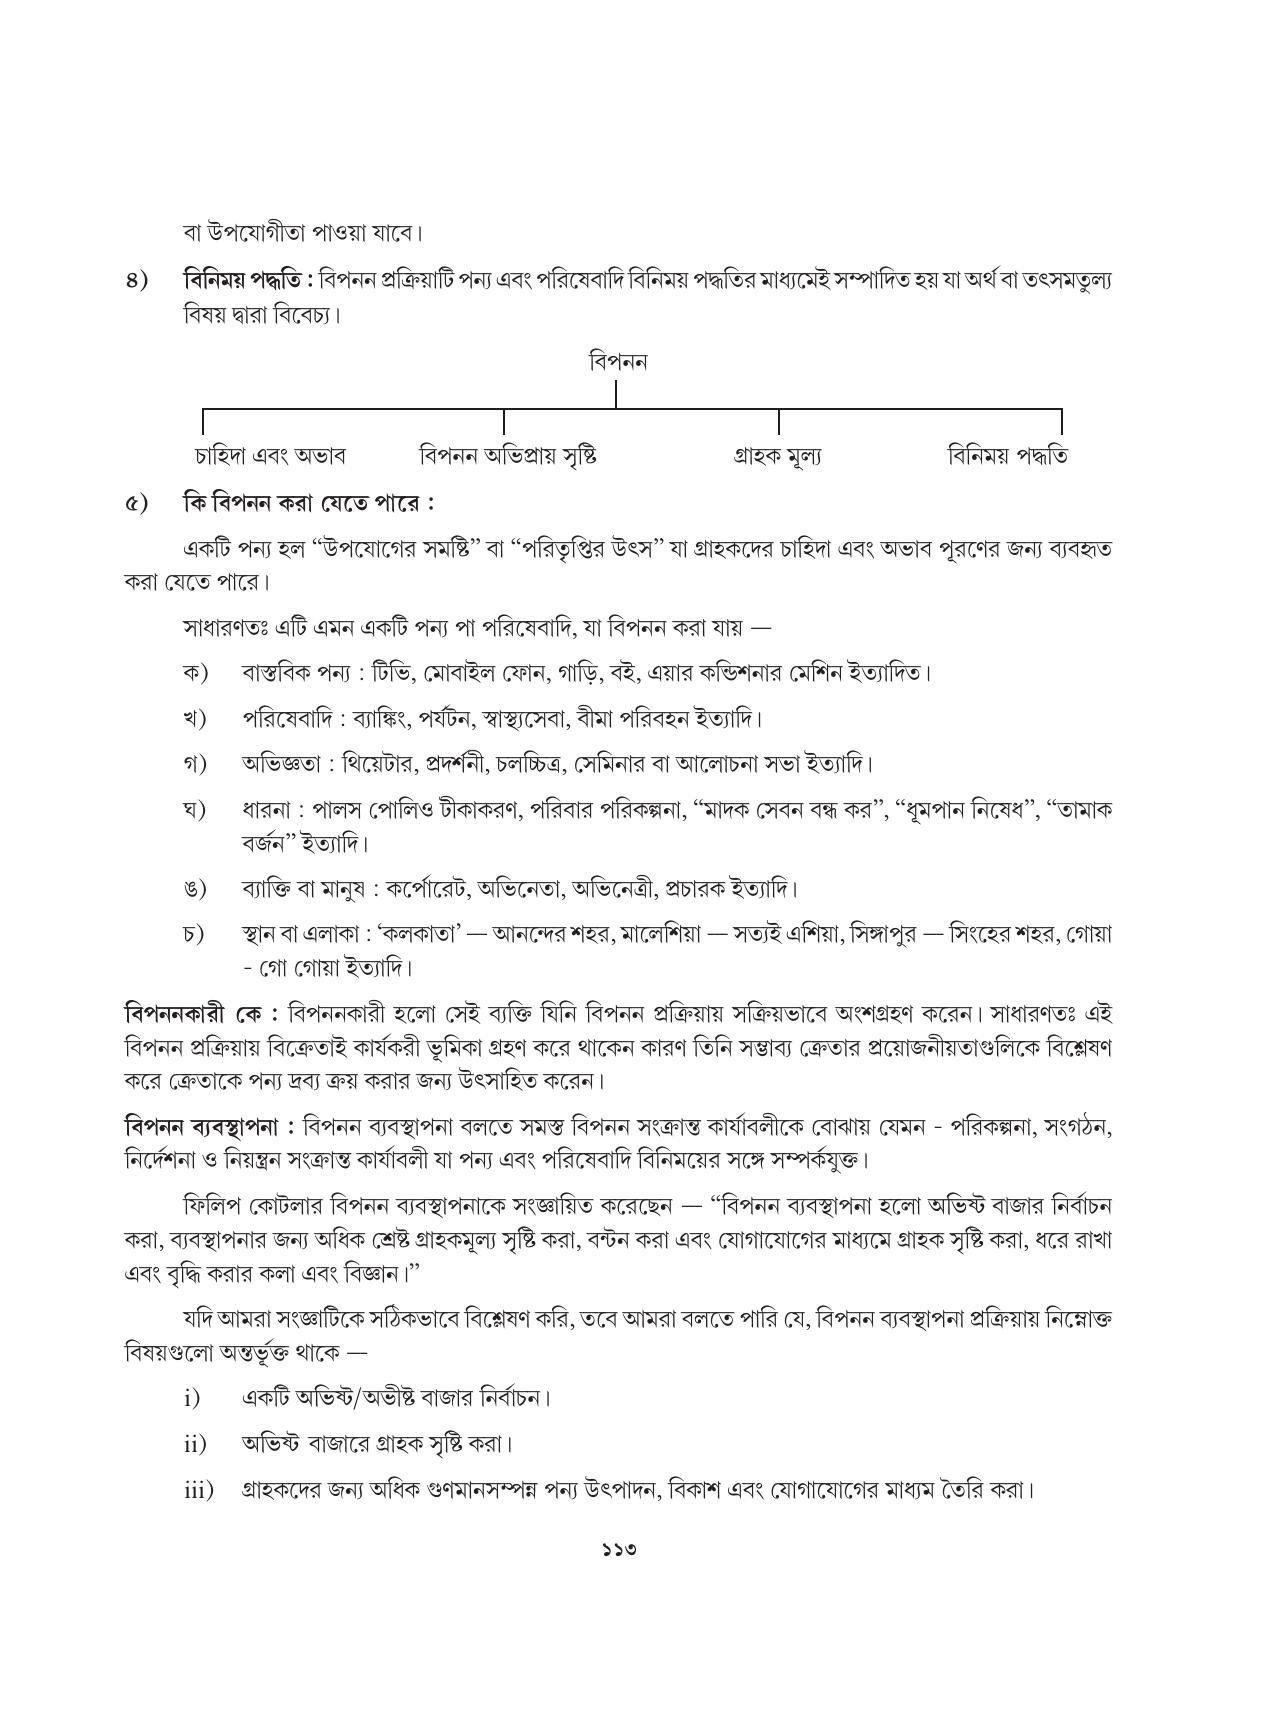 Tripura Board Class 12 Karbari Shastra Bengali Version Workbooks - Page 113